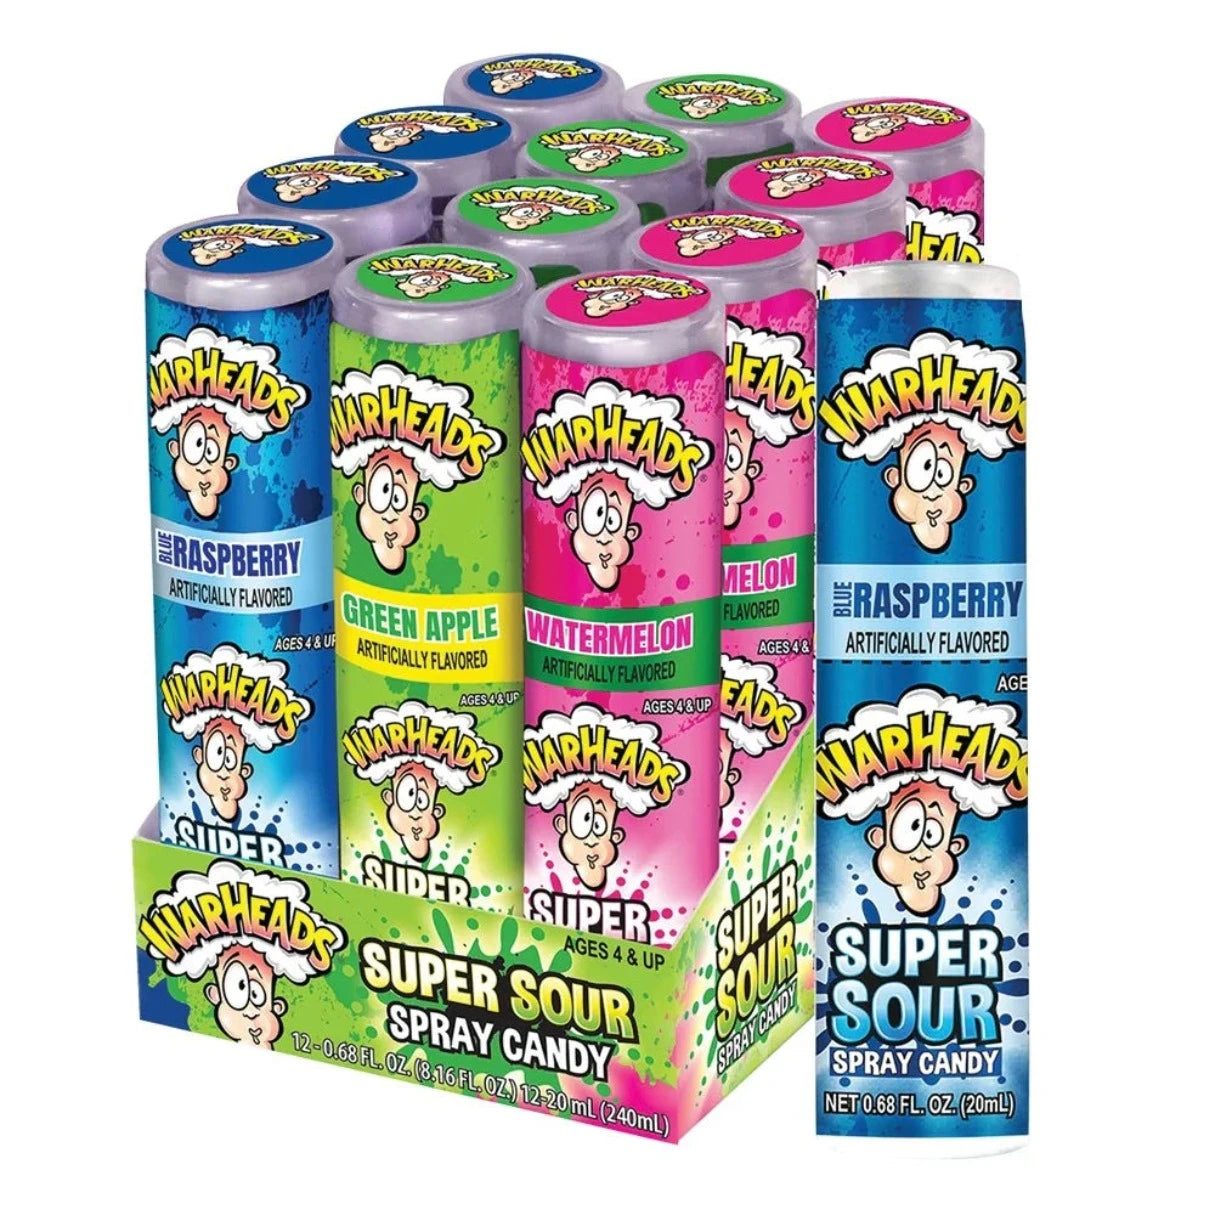 WarHeads Super Sour Spray Candy .68oz - 12ct